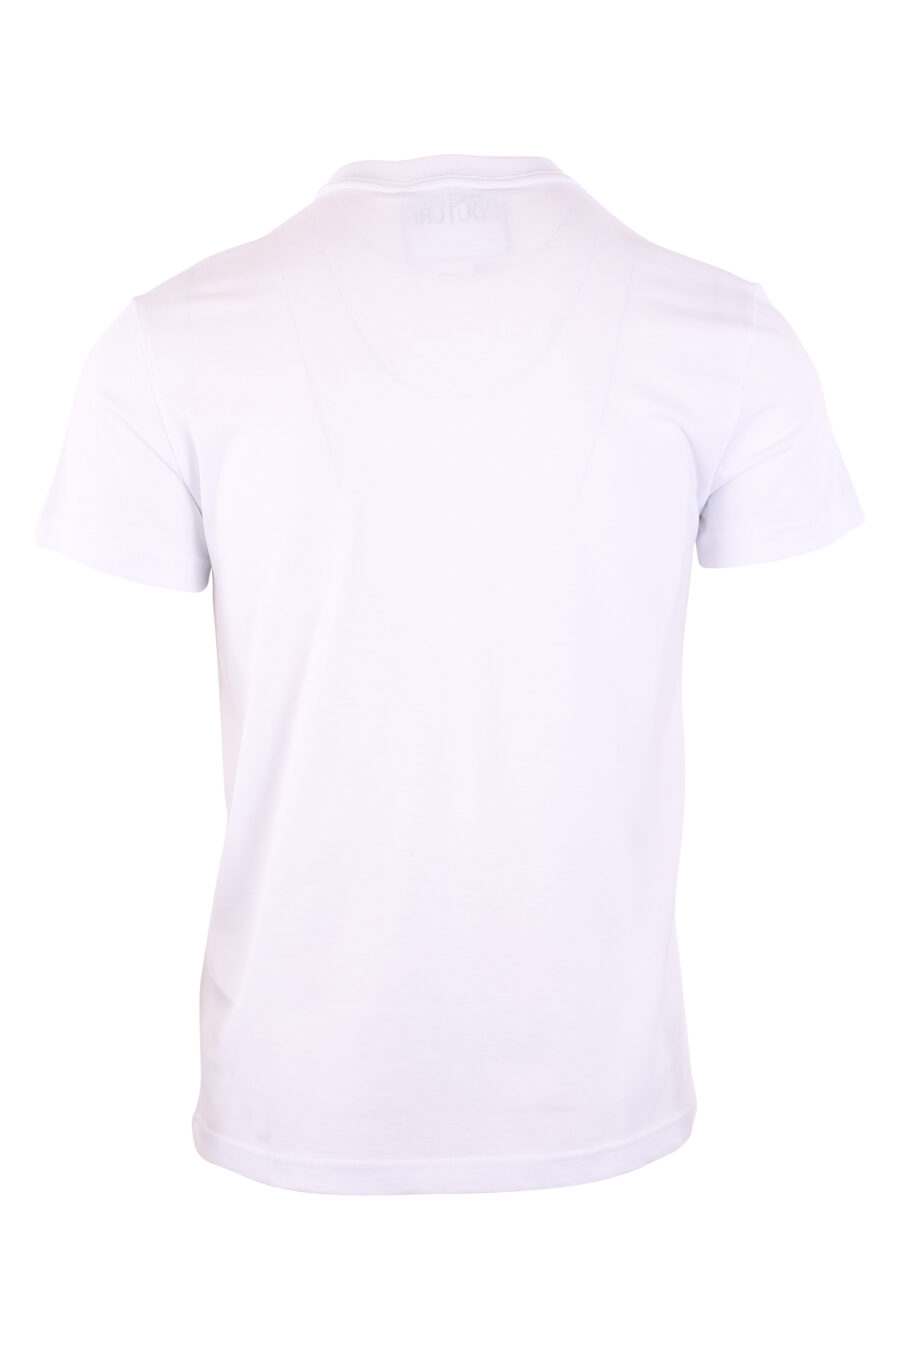 Camiseta blanca con logo redondo negro pequeño - IMG 3116